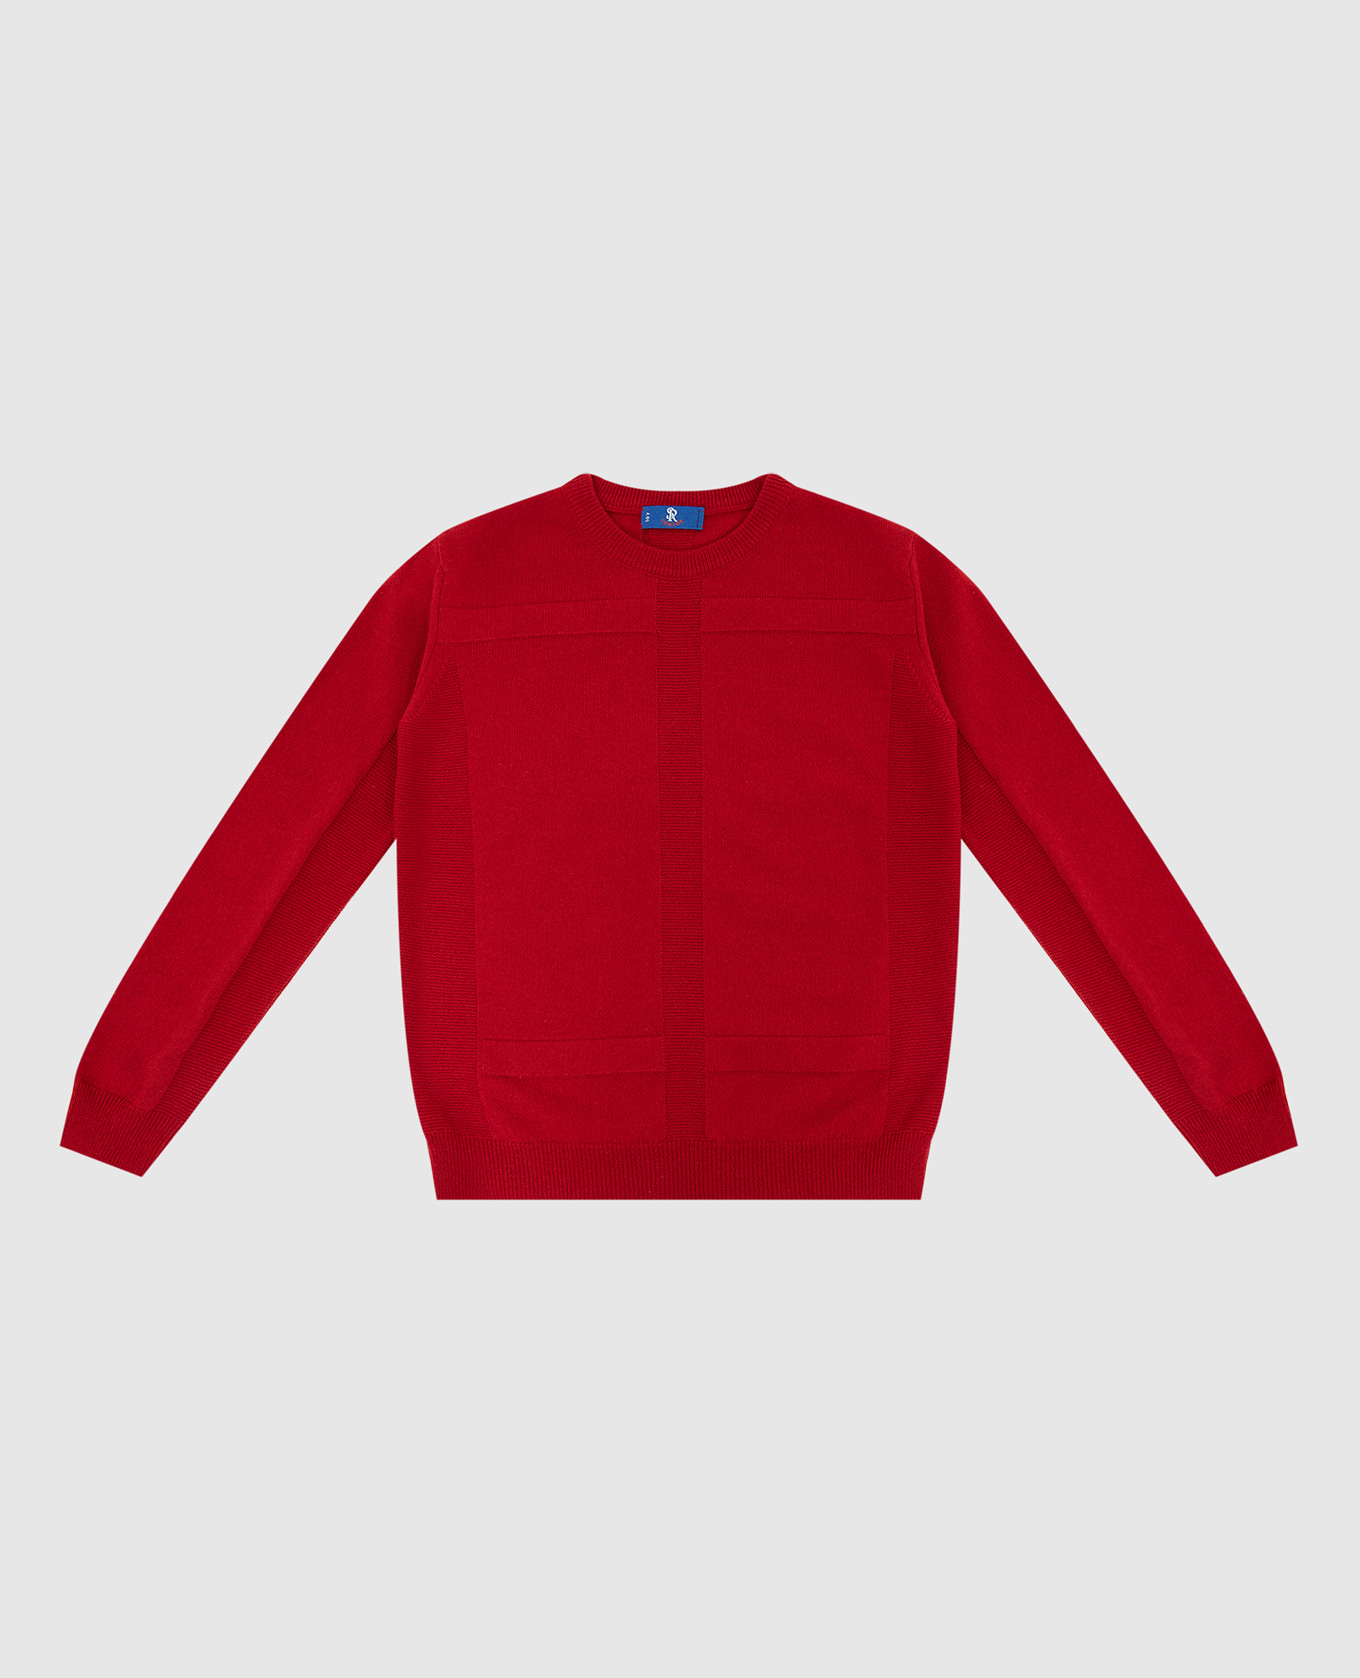 Children's red cashmere sweater